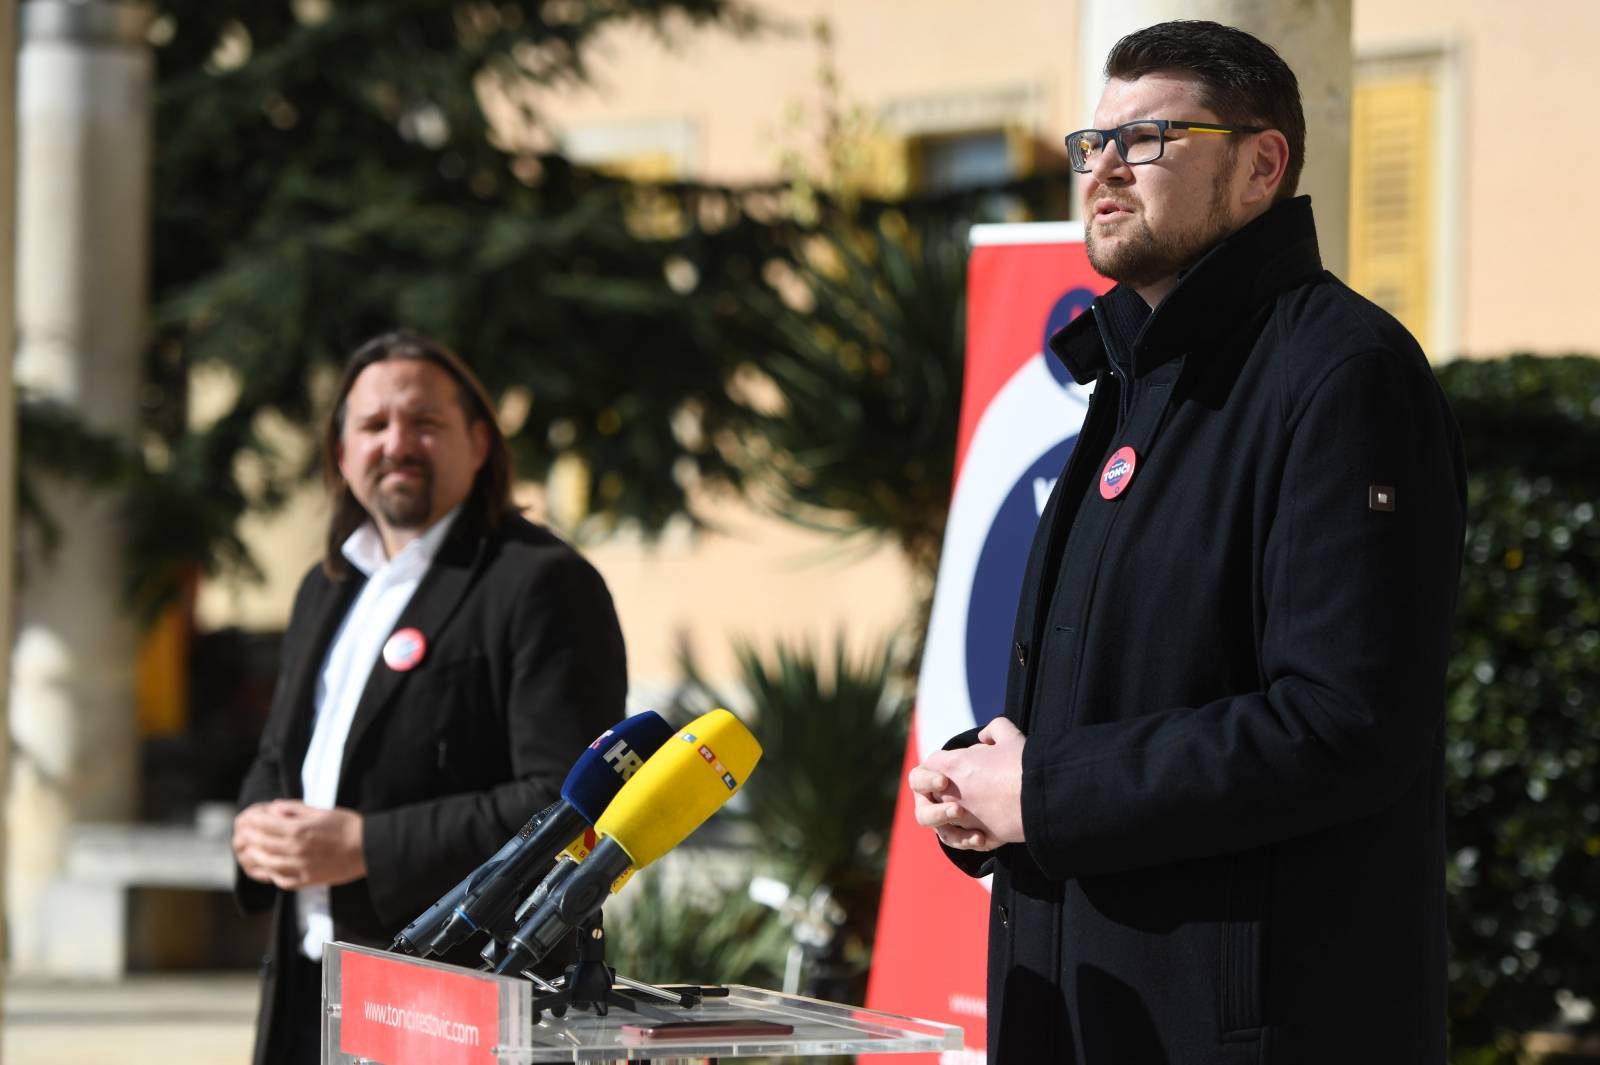 Šibenik: Tonči Restović predstavljen kao kandidat za gradonačelnika